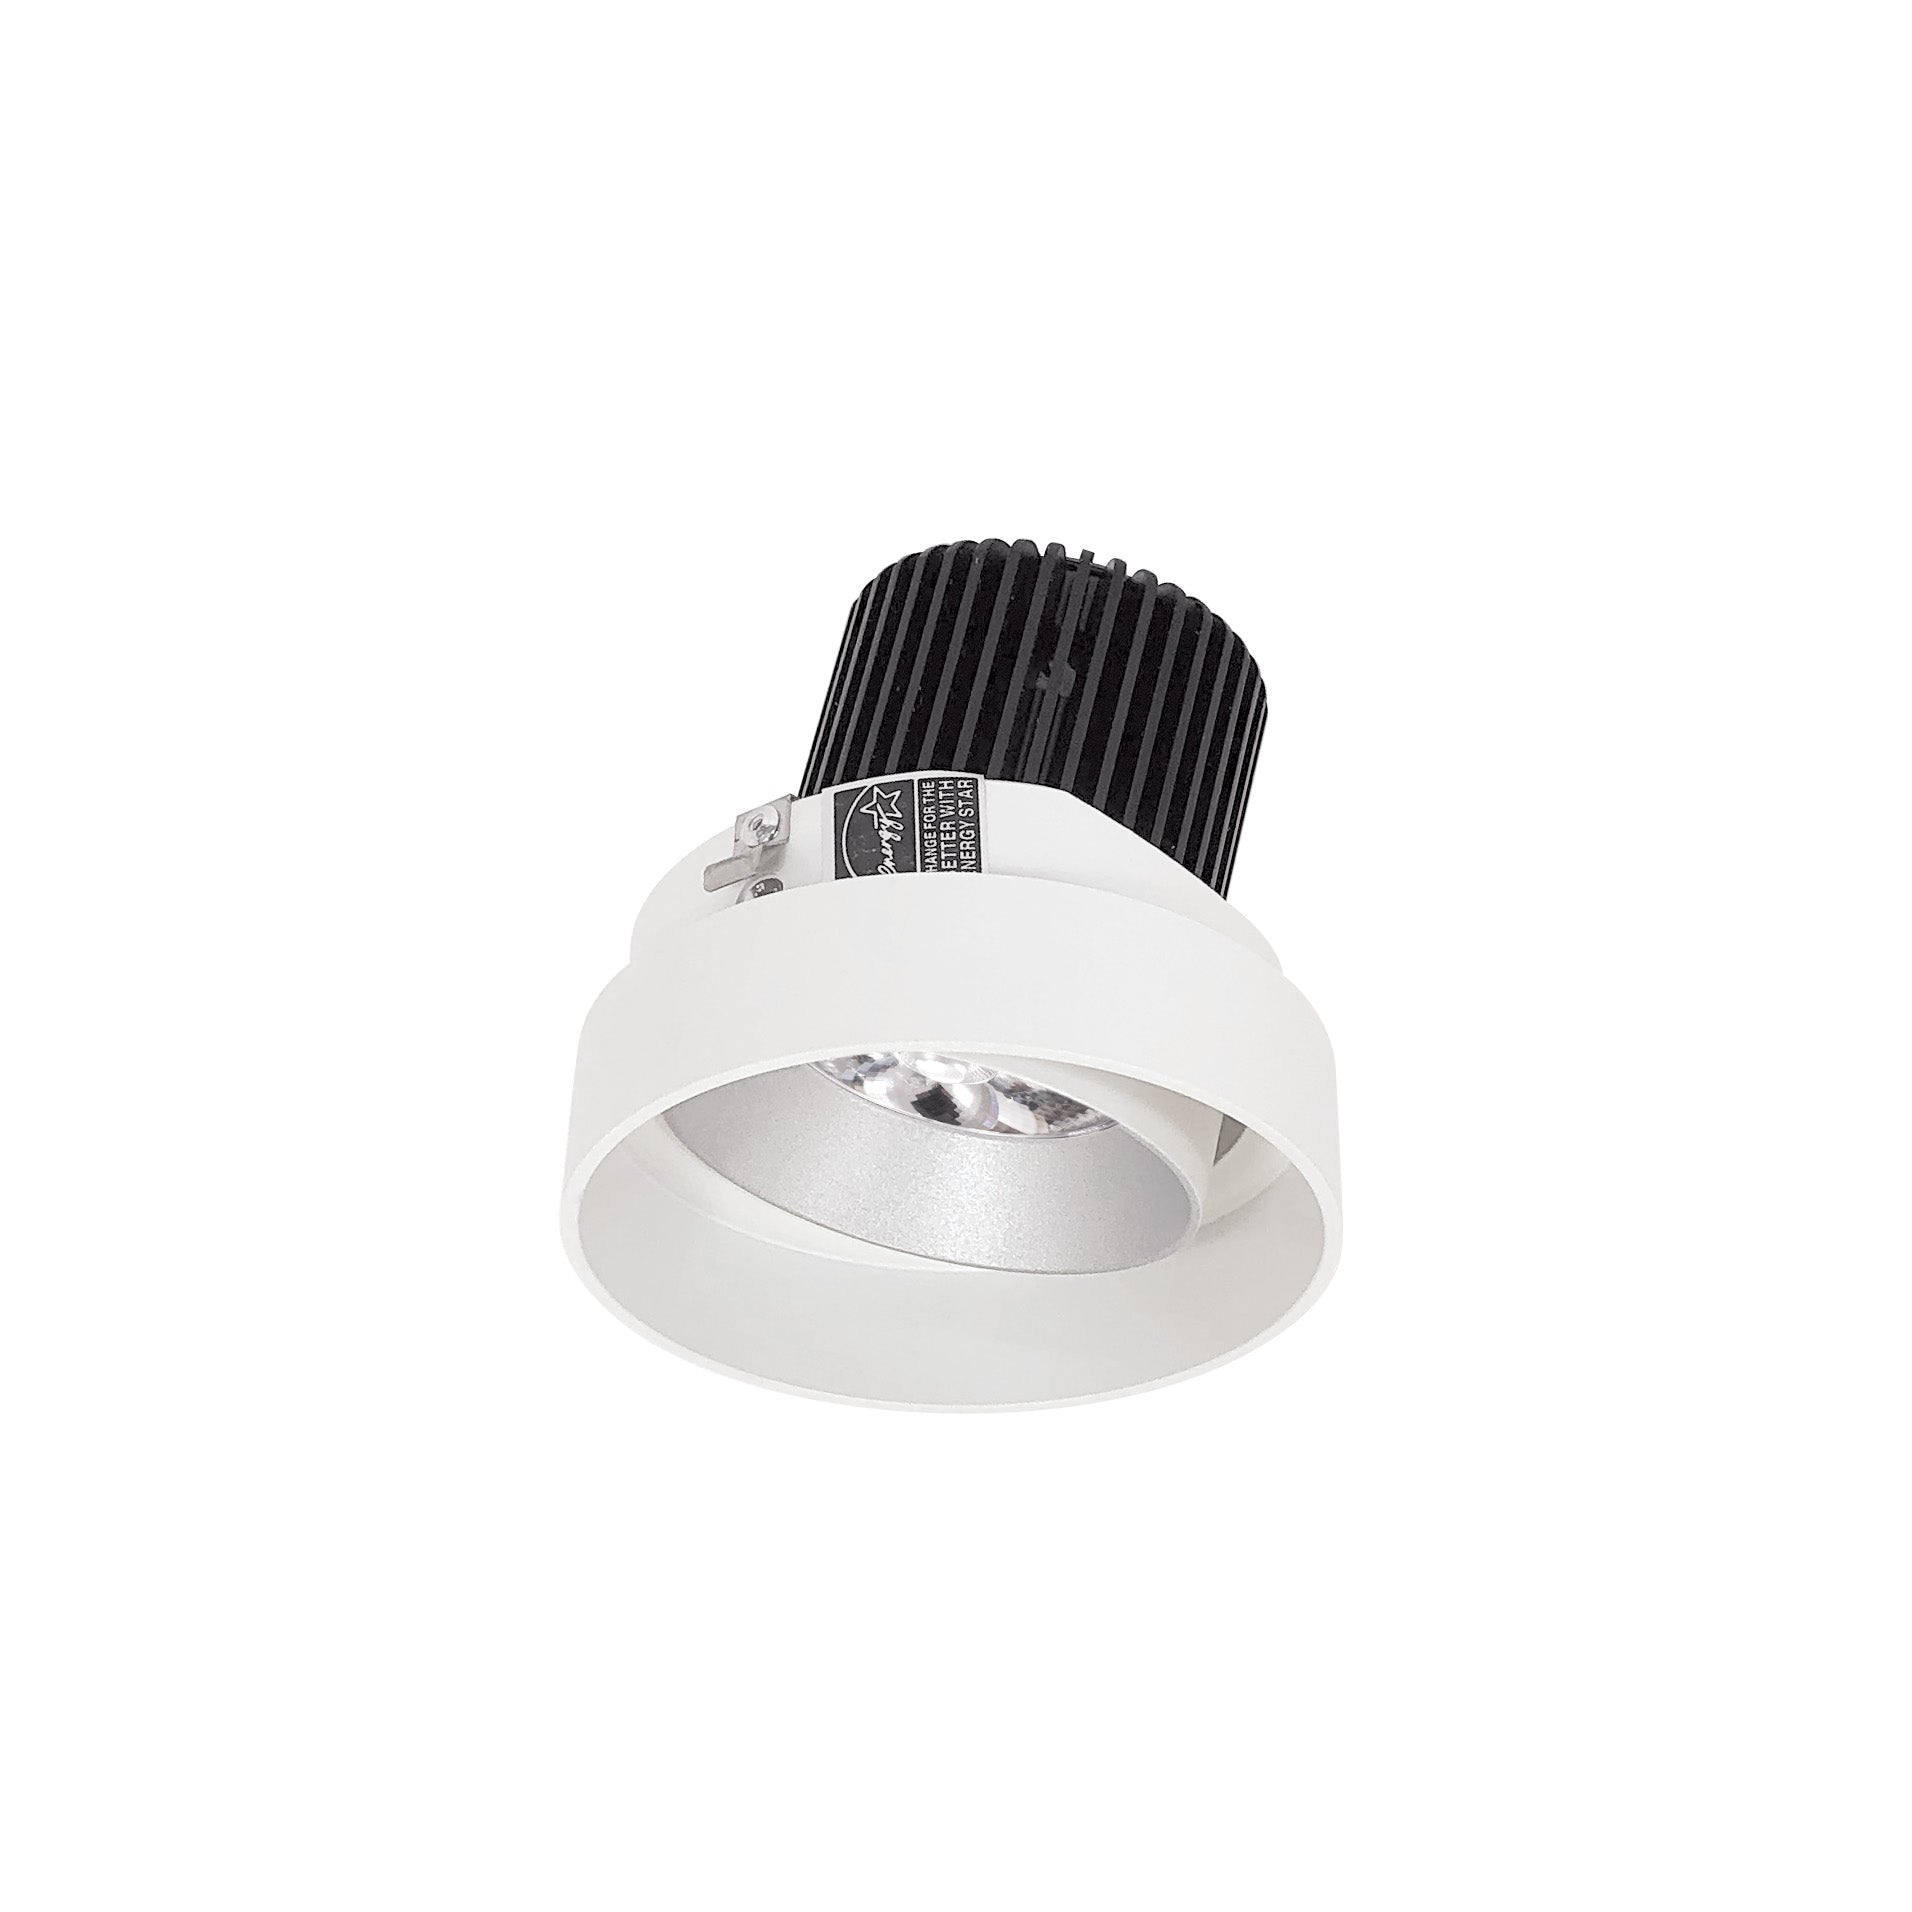 Nora Lighting NIO-4RTLA35QHW 4" Iolite LED Round Trimless Adjustable, 10-Degree Optic, 800lm / 12W, 3500K - Haze Adjustable / White Reflector